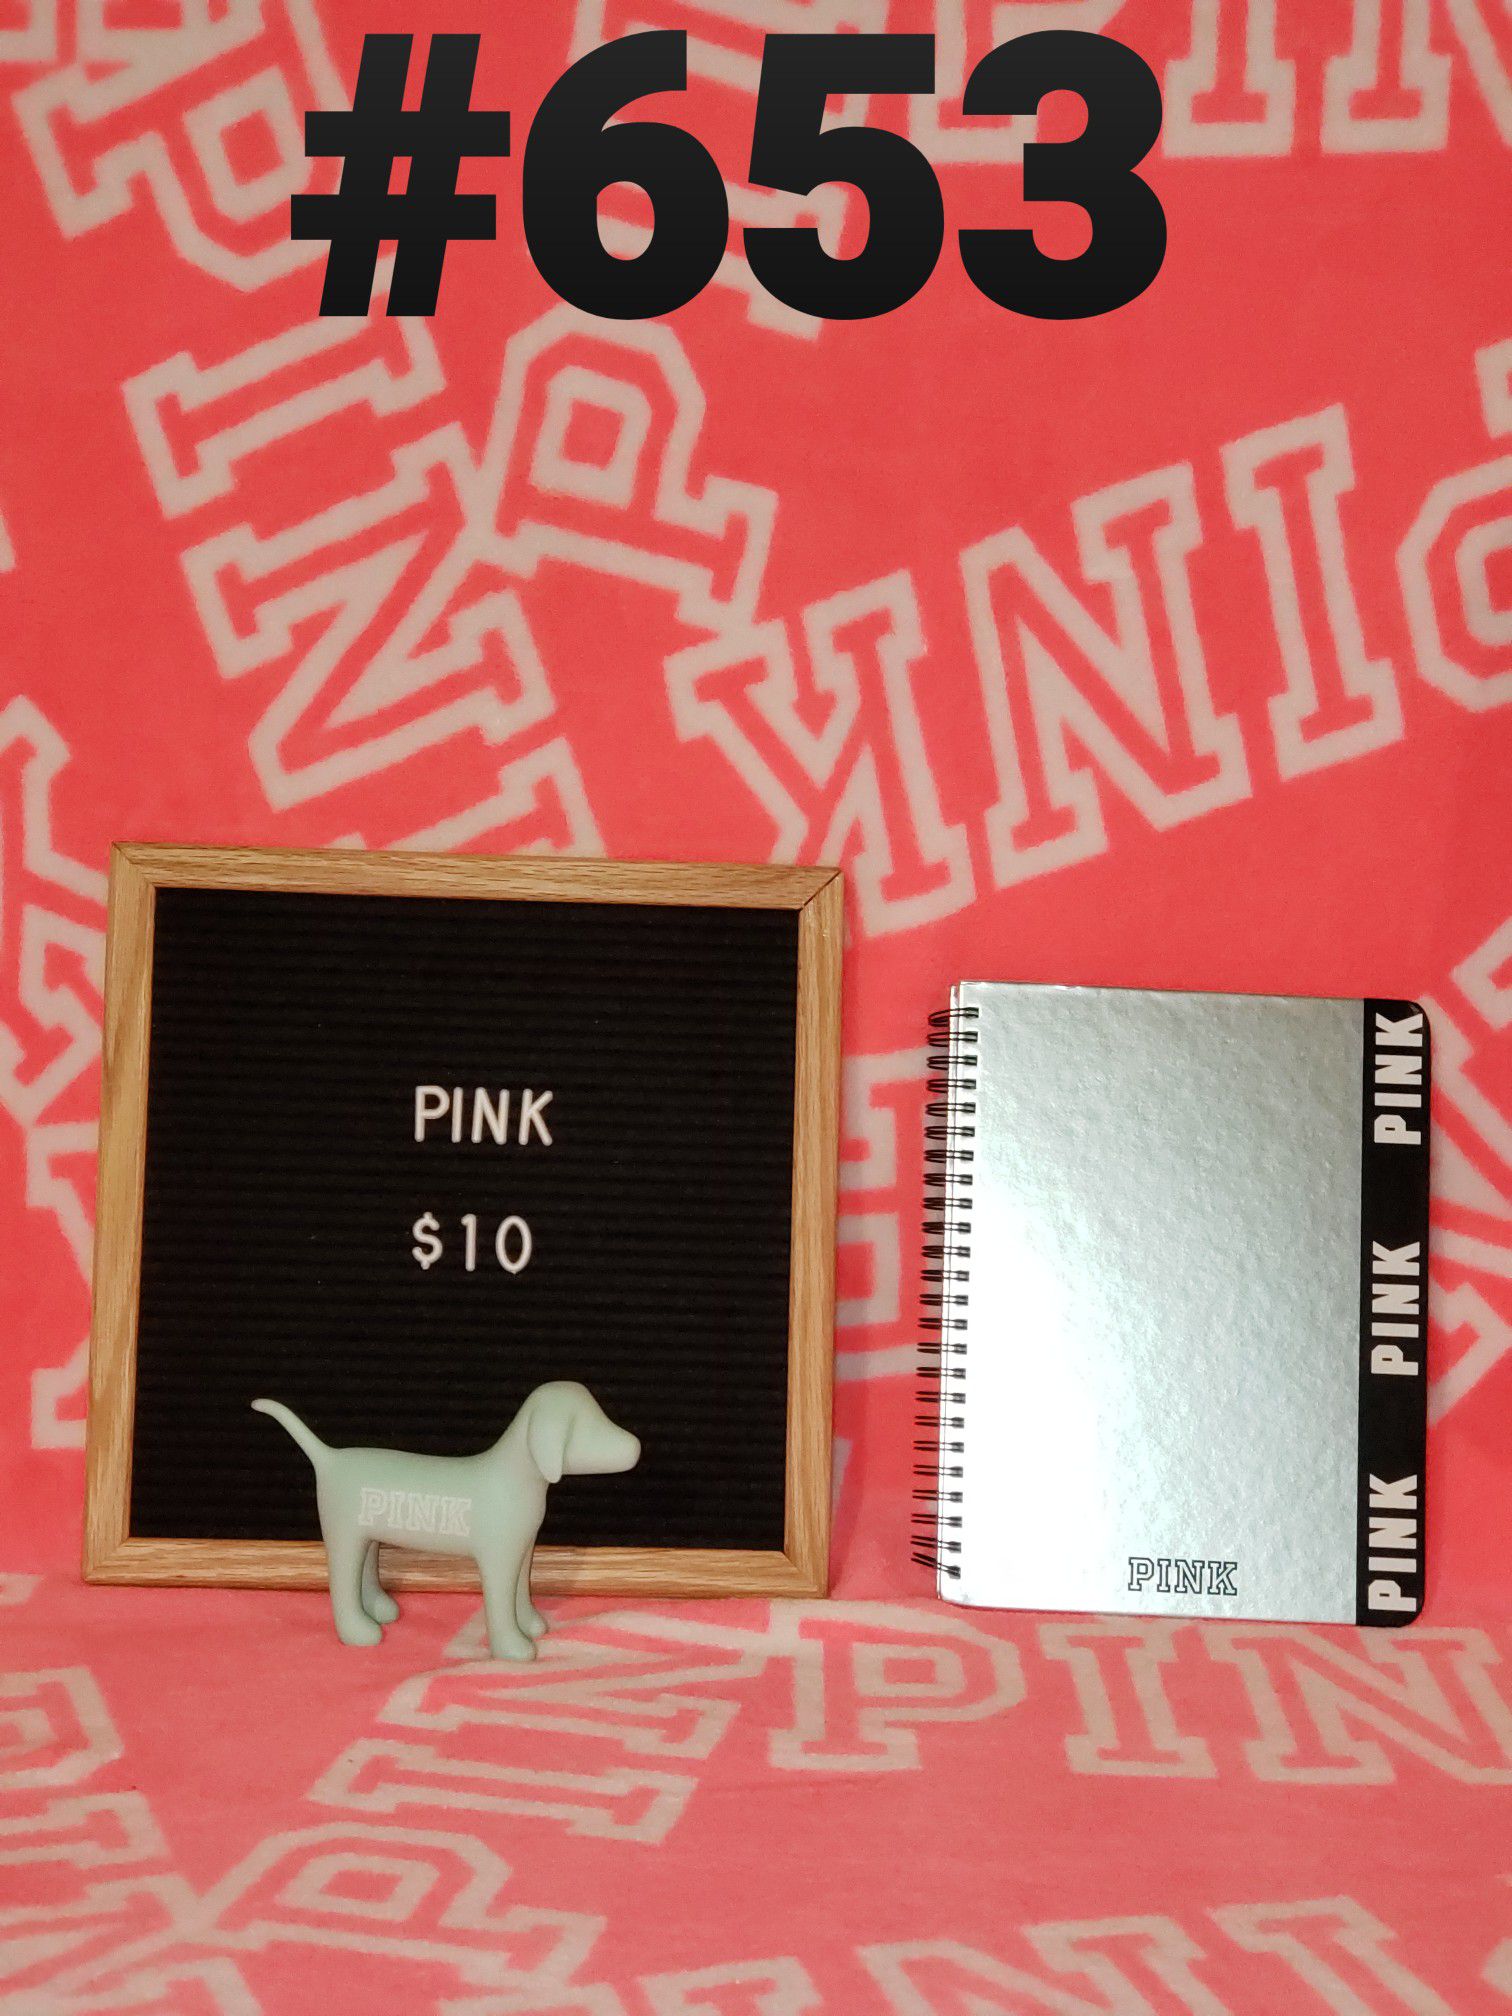 Victoria's secret PINK notebook